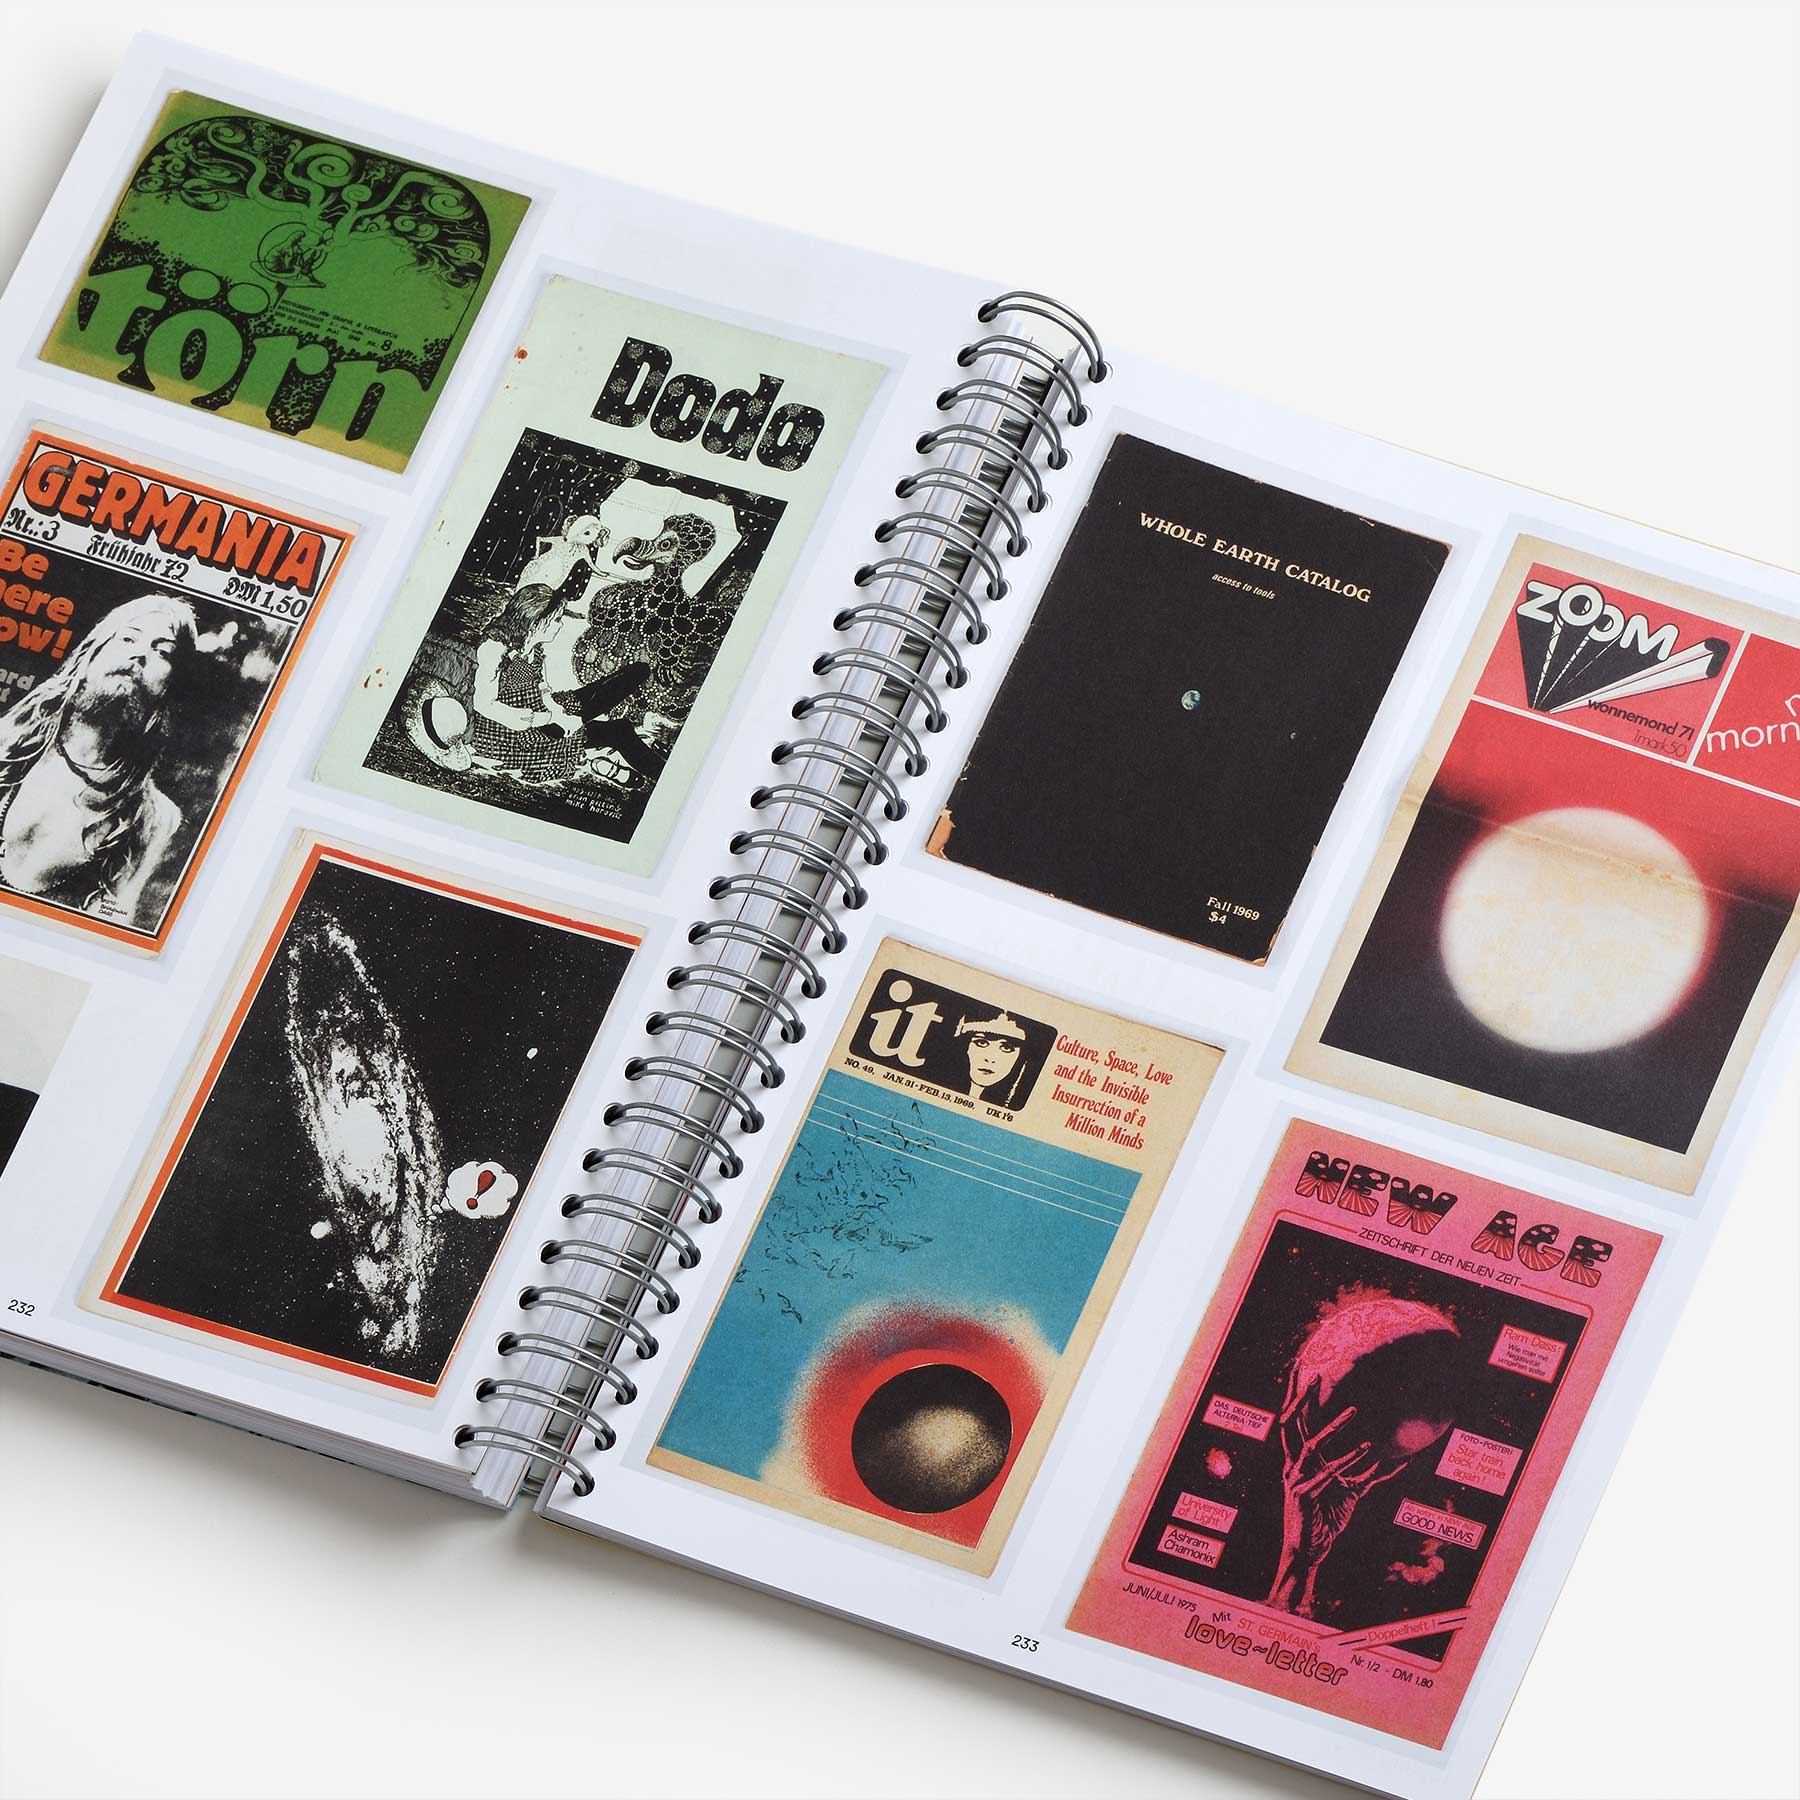 Under the Radar (Reprint): Underground Zines and Self-Publications 1965 – 1975